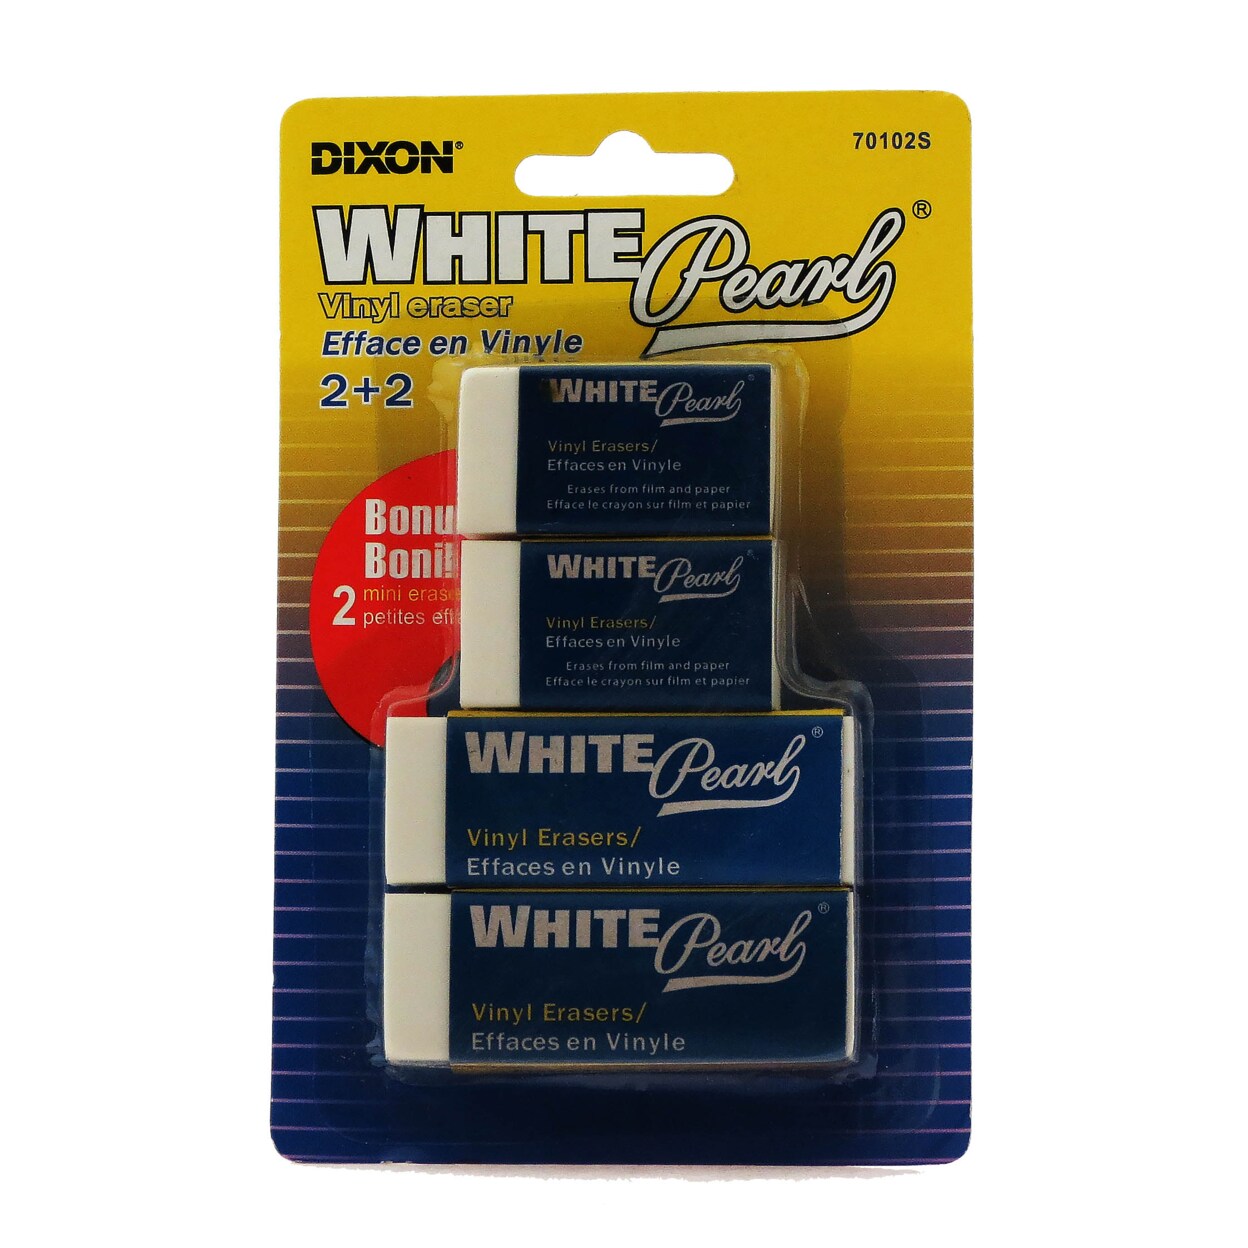 Dixon Vinyl Eraser White Pearl 2+2